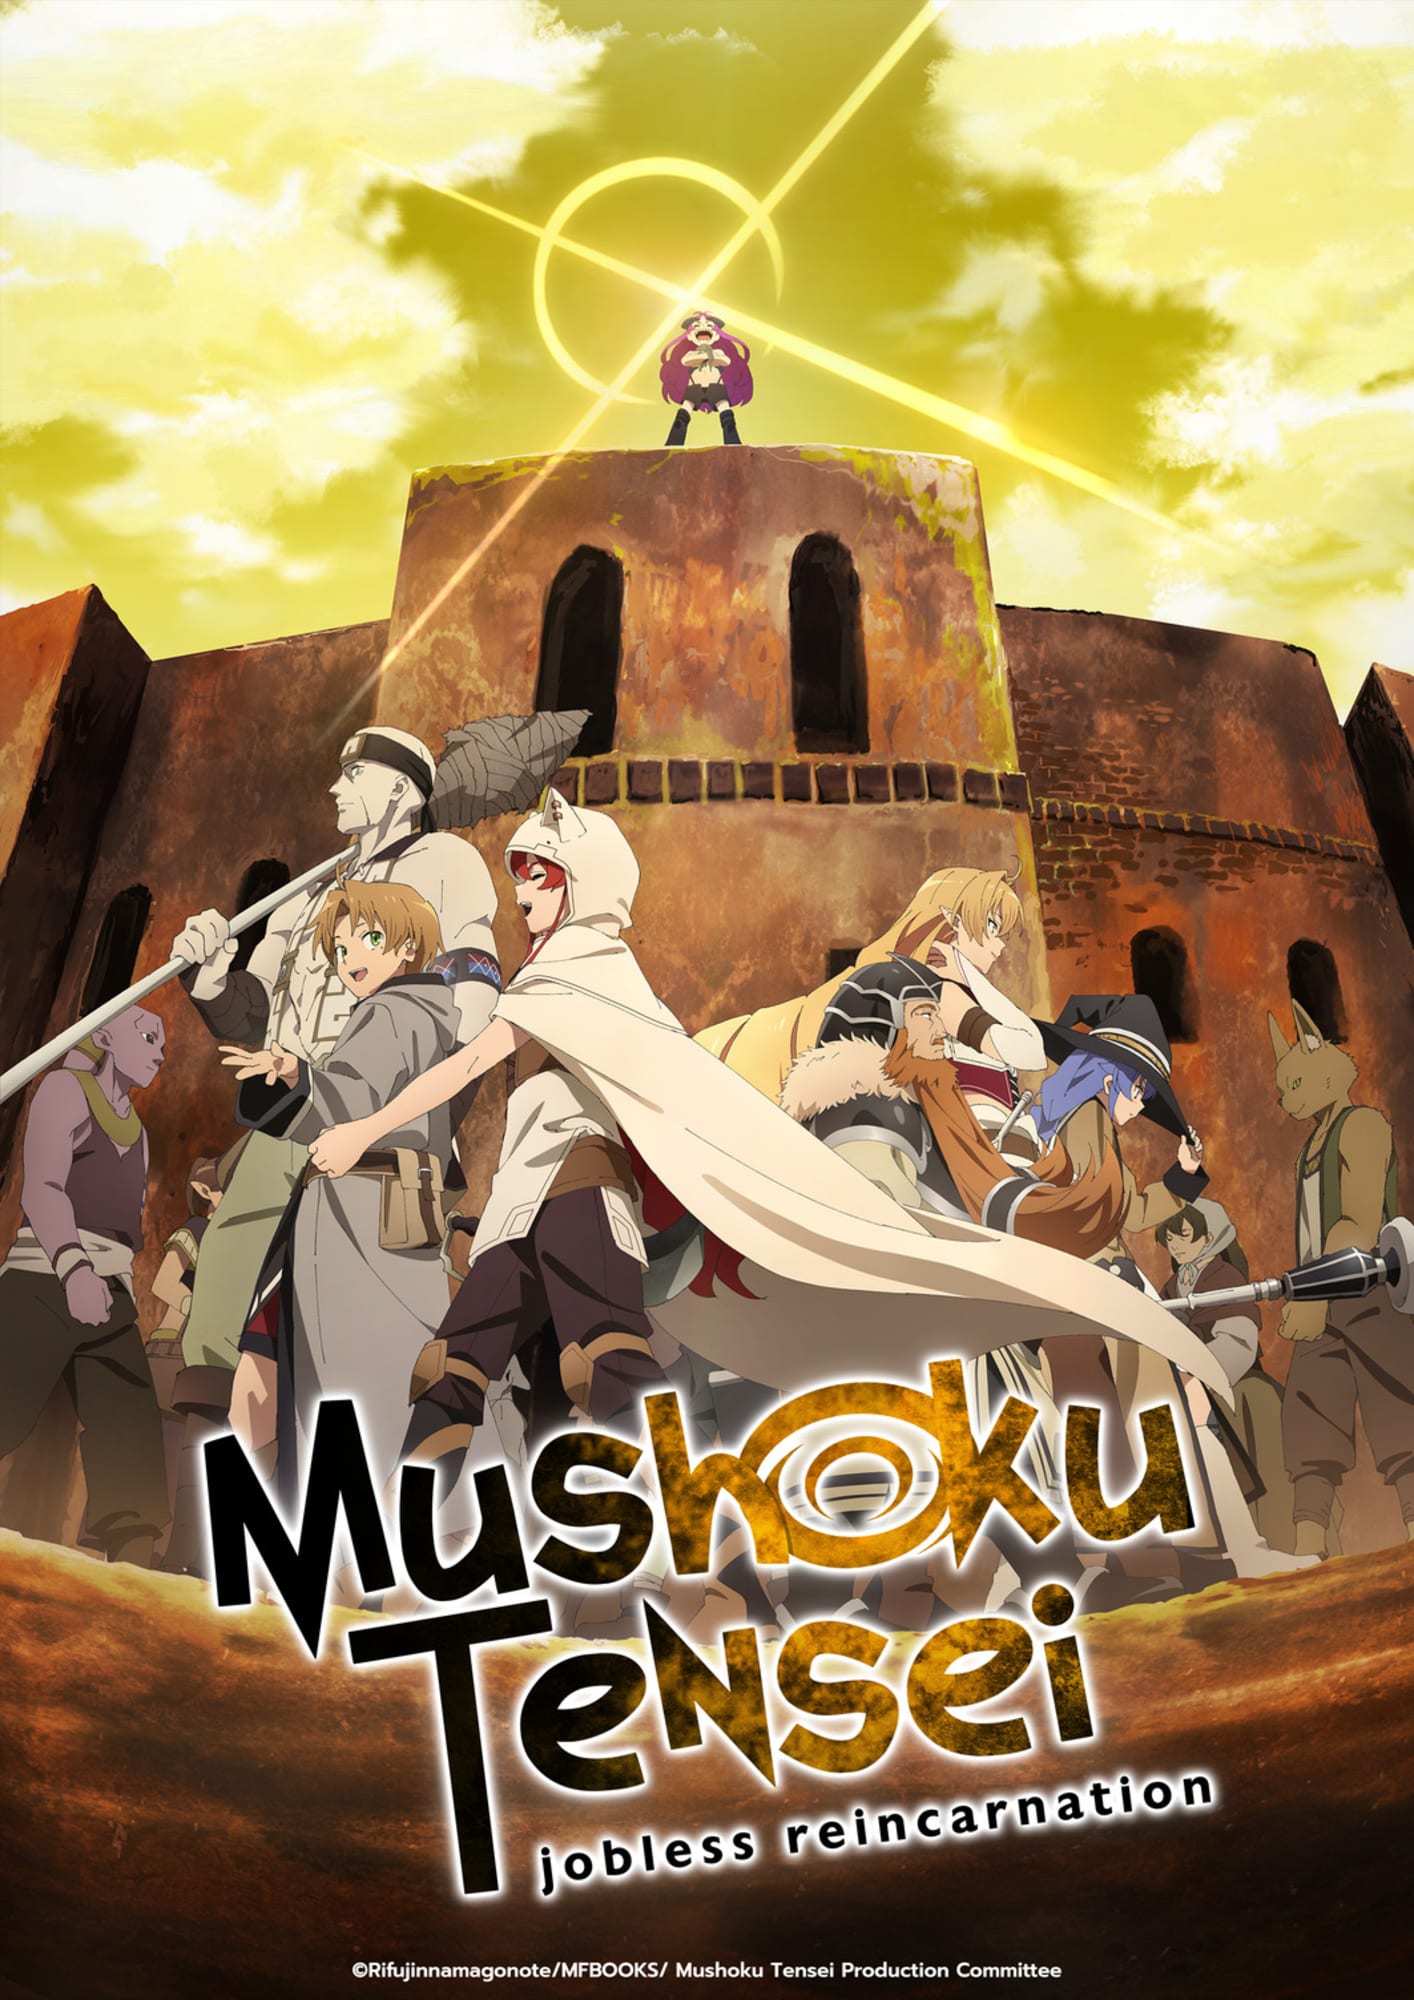 Mushoku tensei season 2 release date